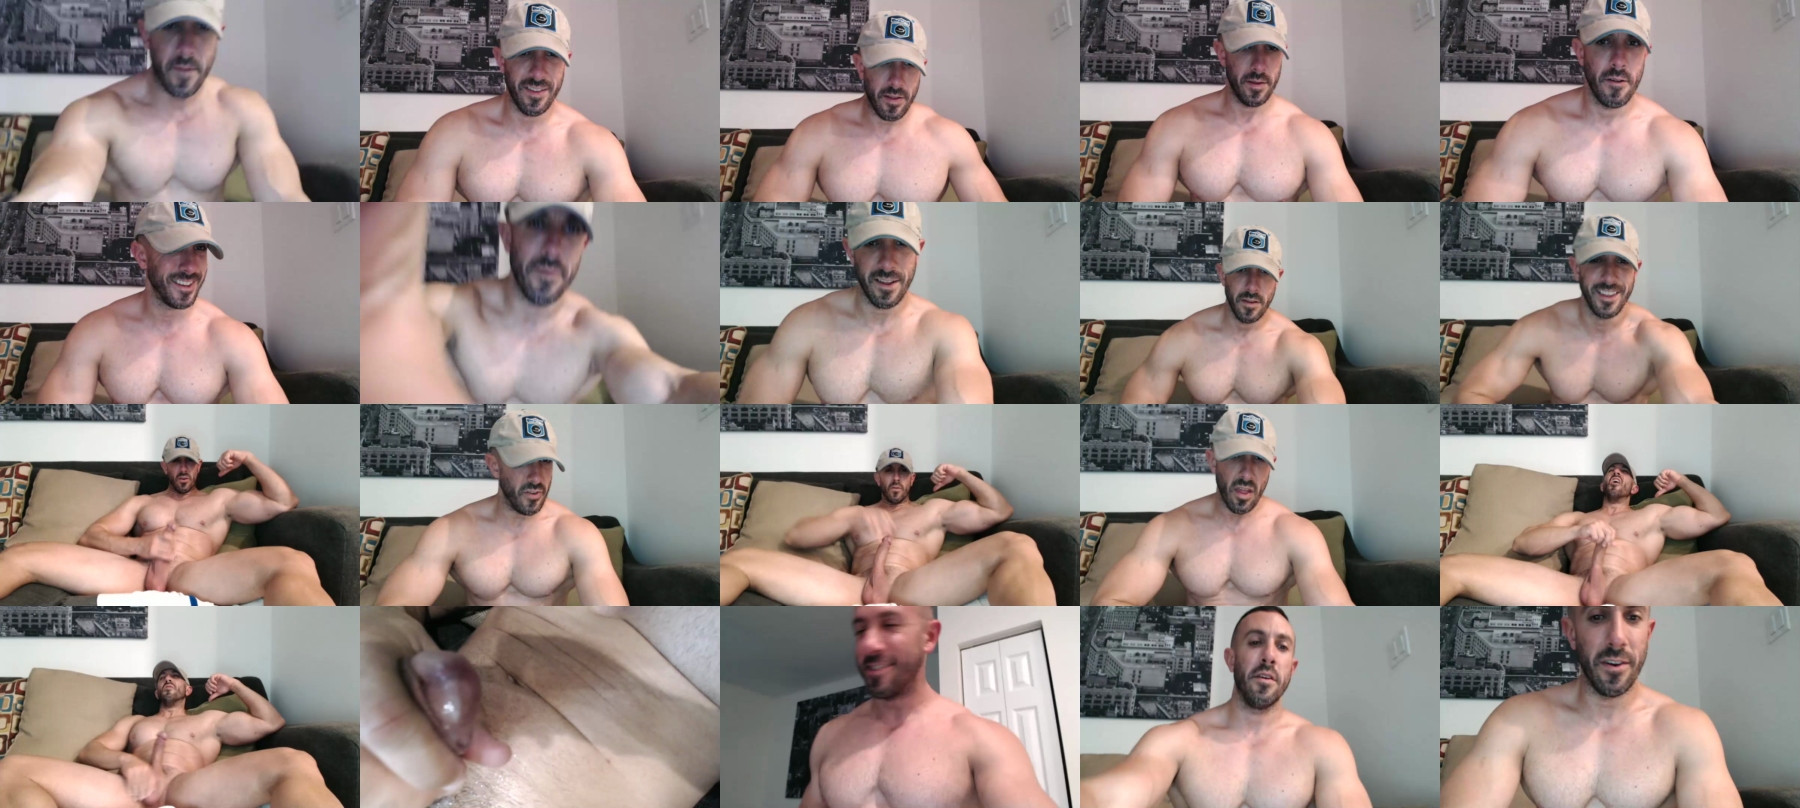 Nerdmuscles2x  23-06-2021 Male Topless